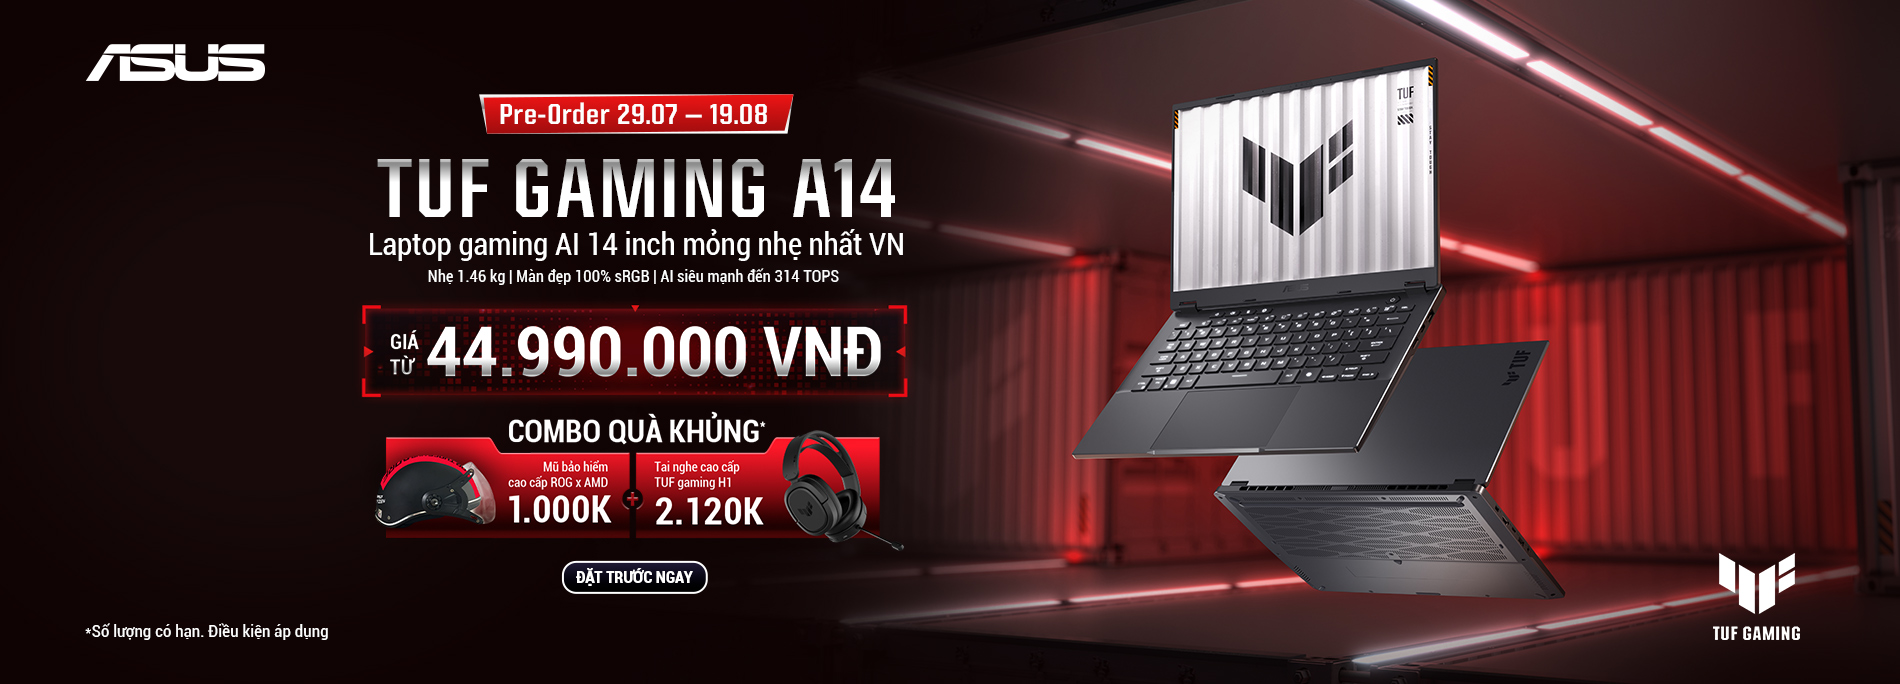 Pre-order: ASUS TUF Gaming A14 - Laptop Gaming AI 14 inch mỏng nhẹ nhất Việt Nam 